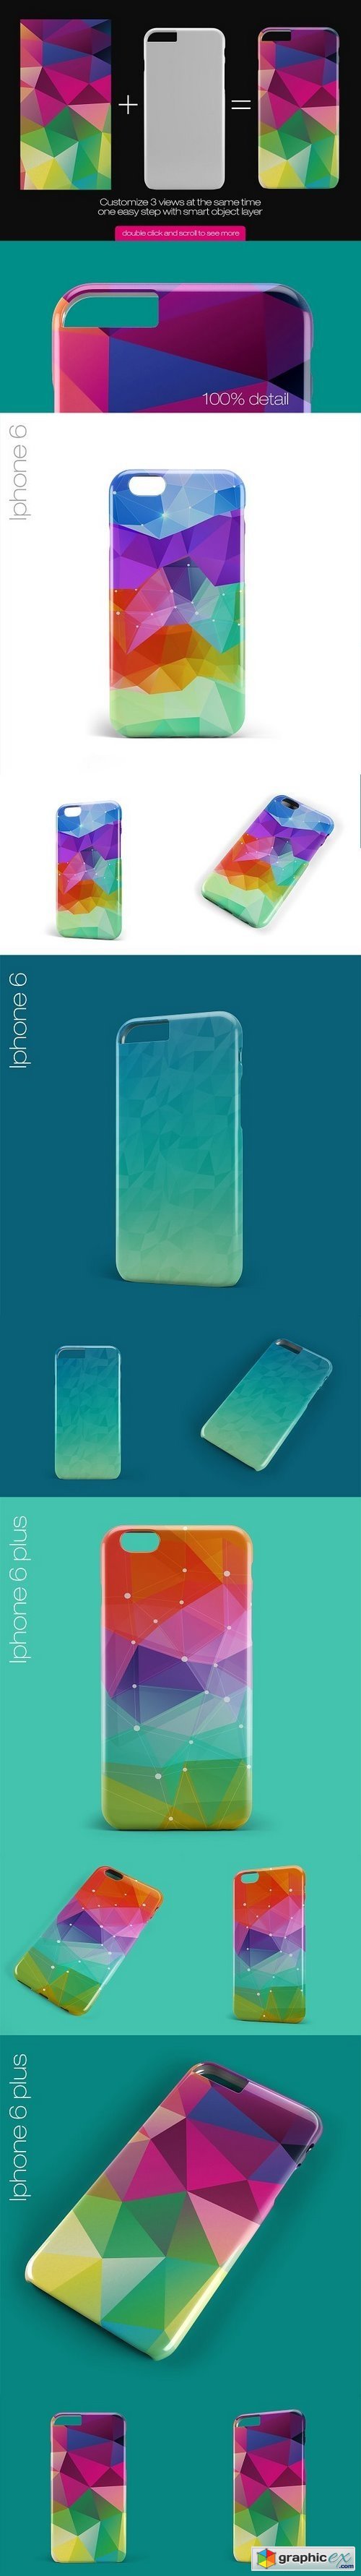 Iphone 6/6S/6Plus Case Mock-Up